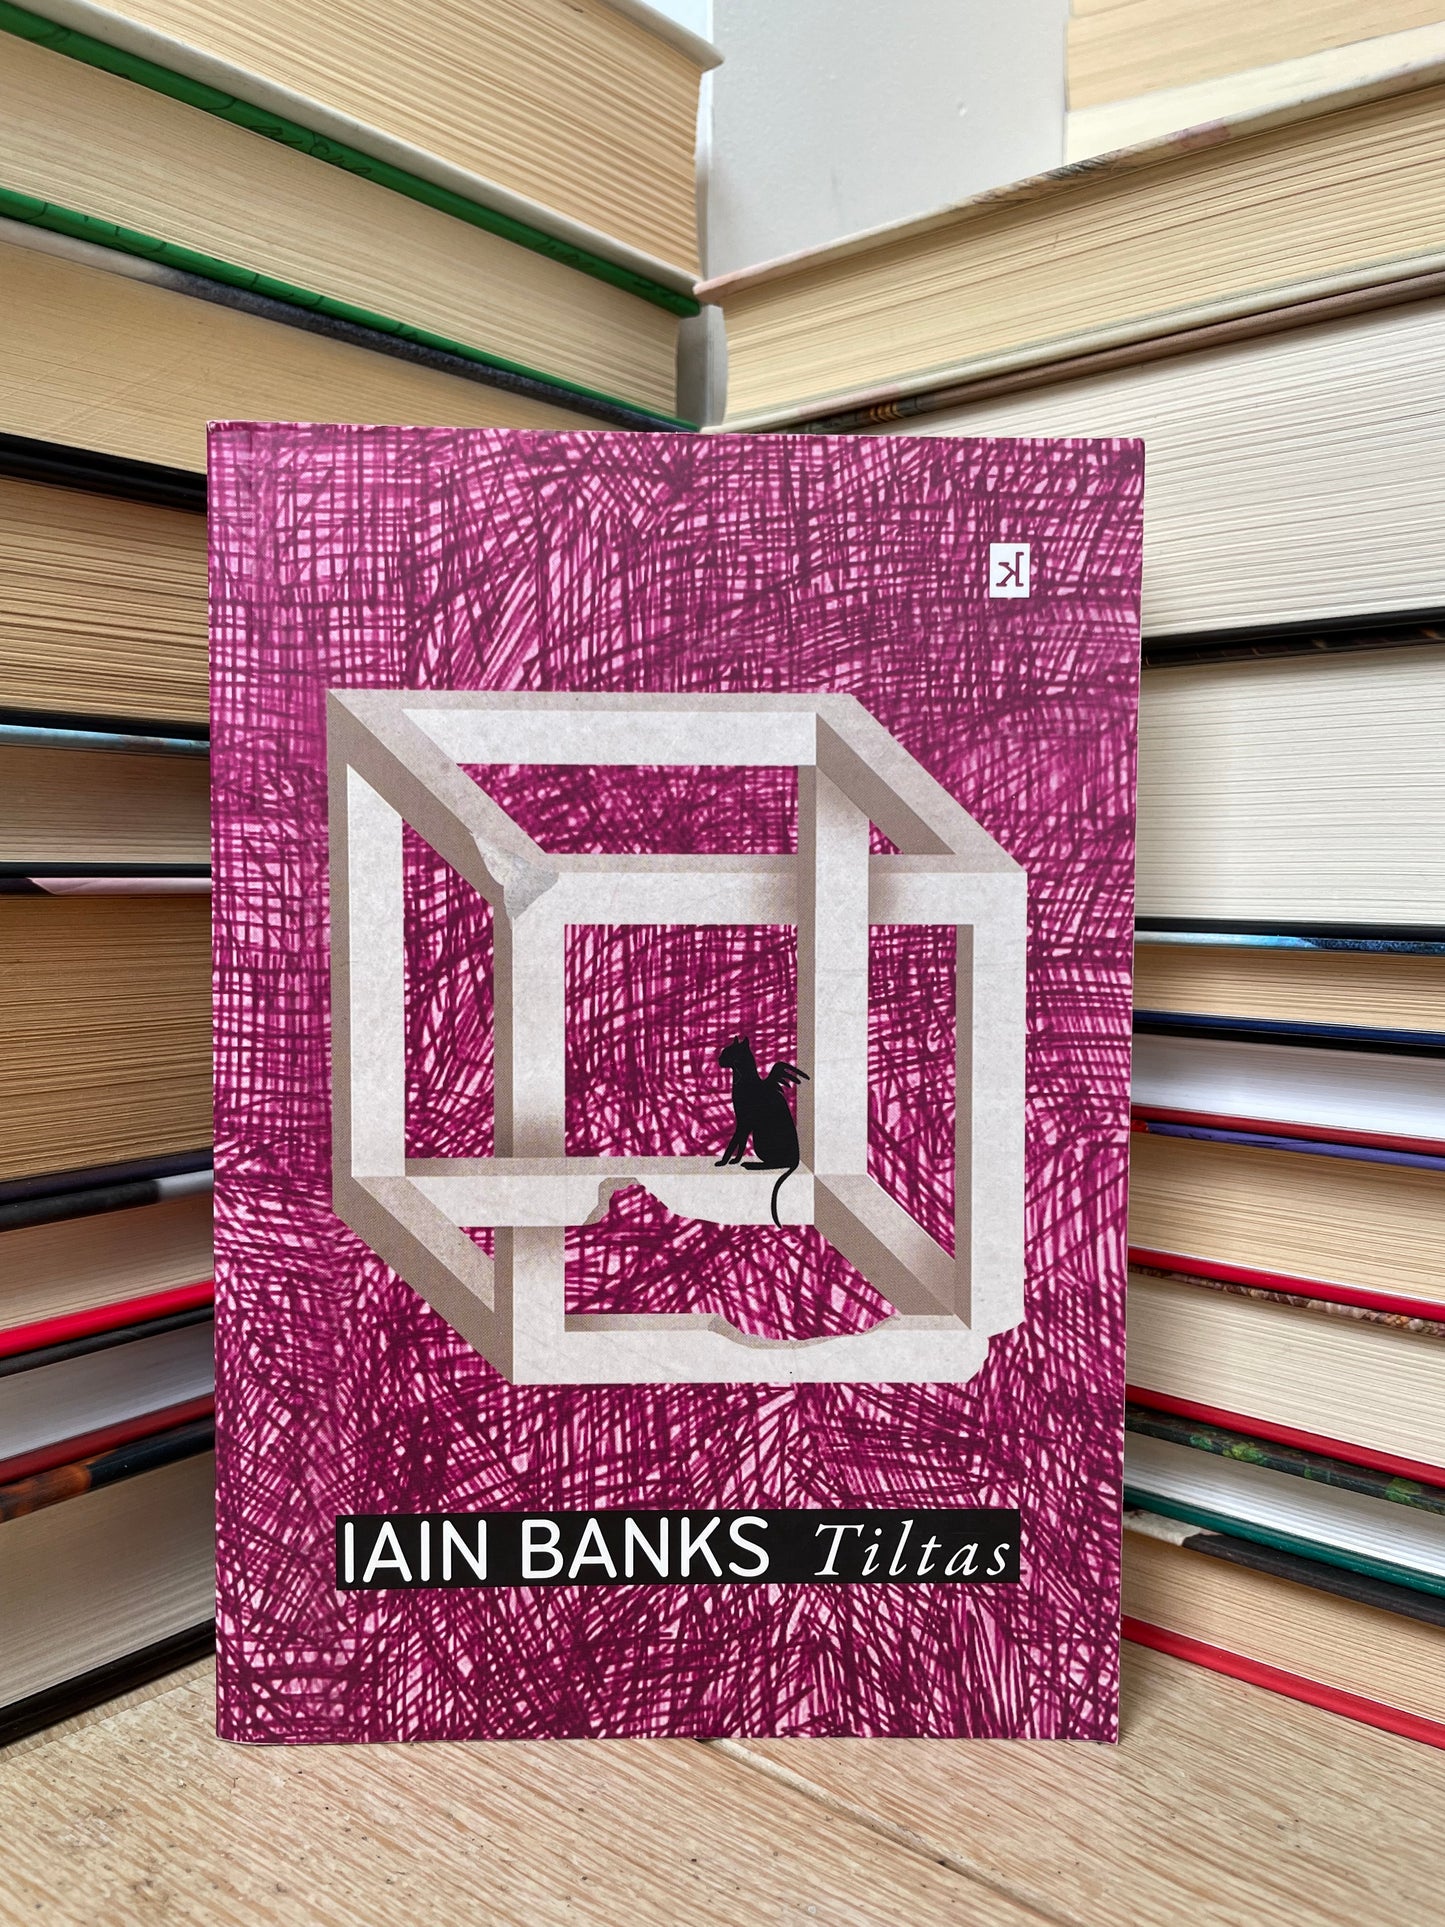 Iain Banks - ,,Tiltas"